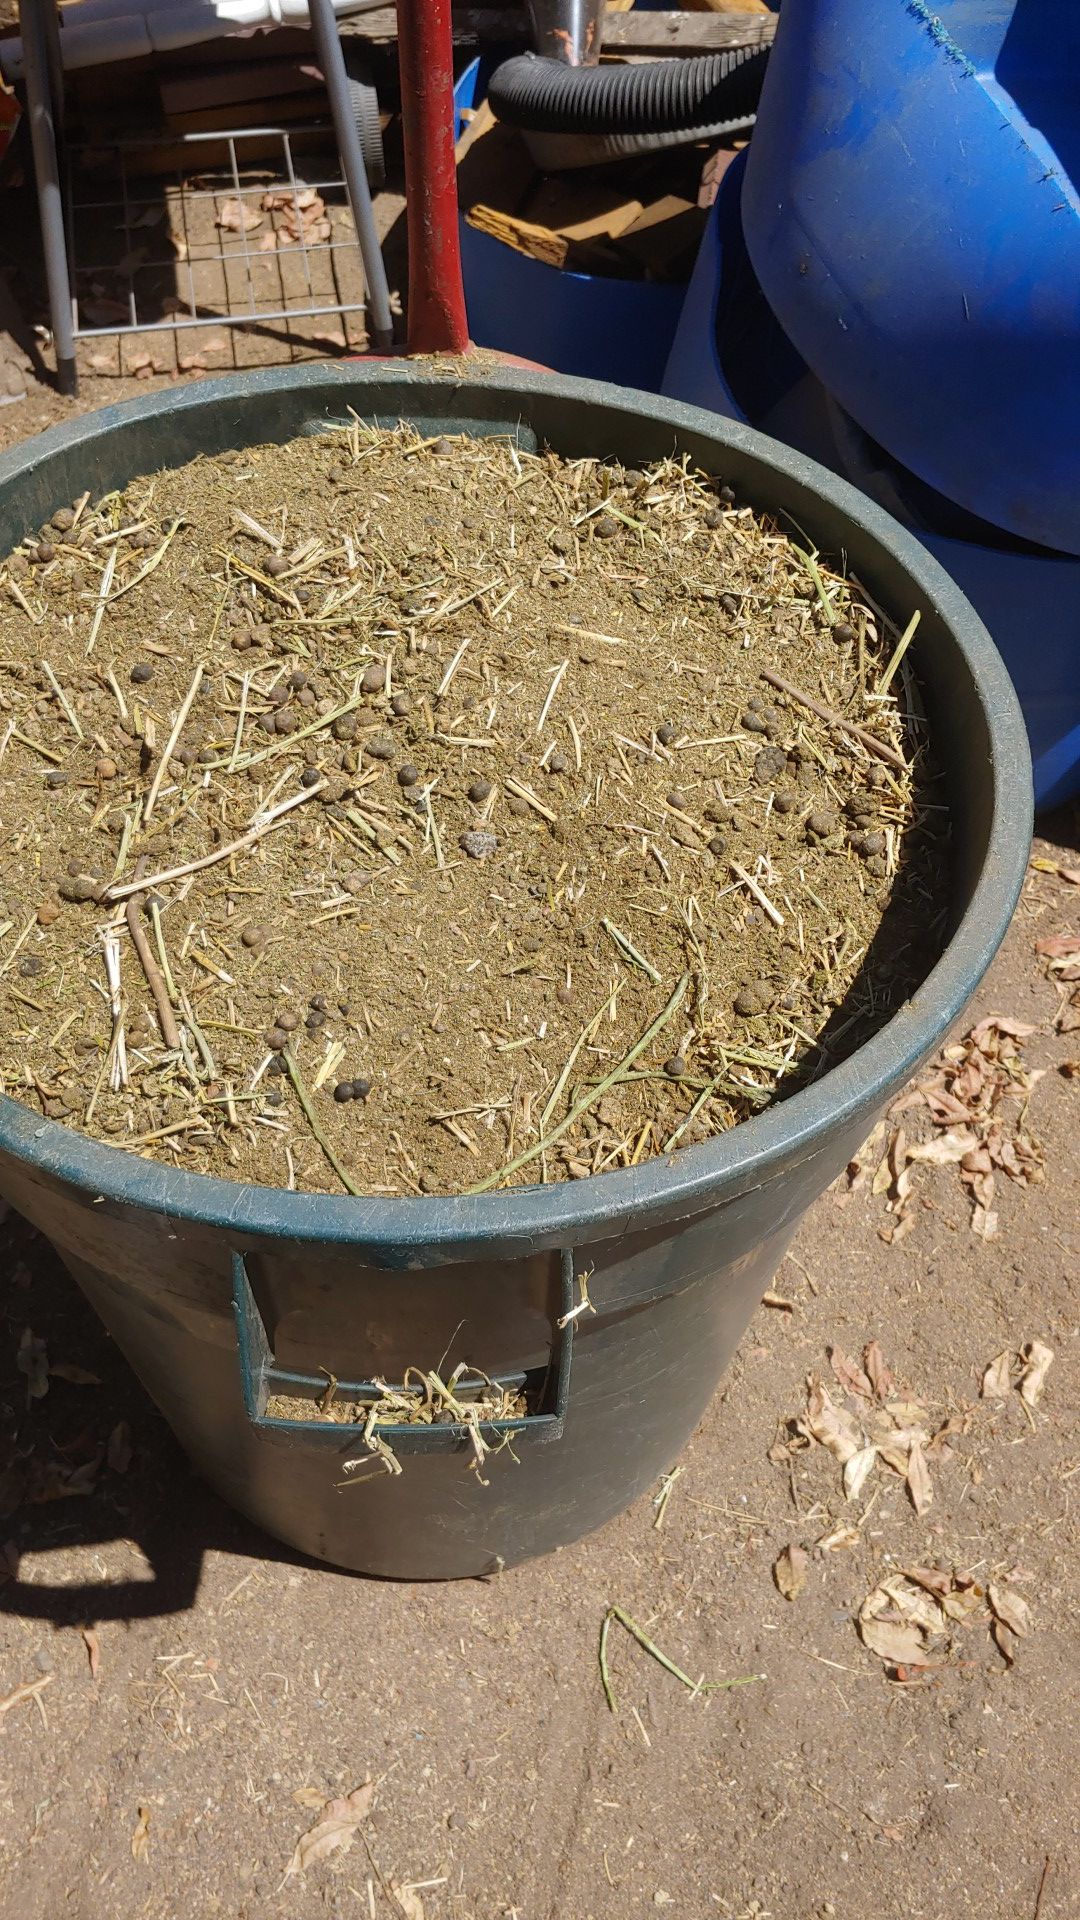 Goat fertilizer/manure free